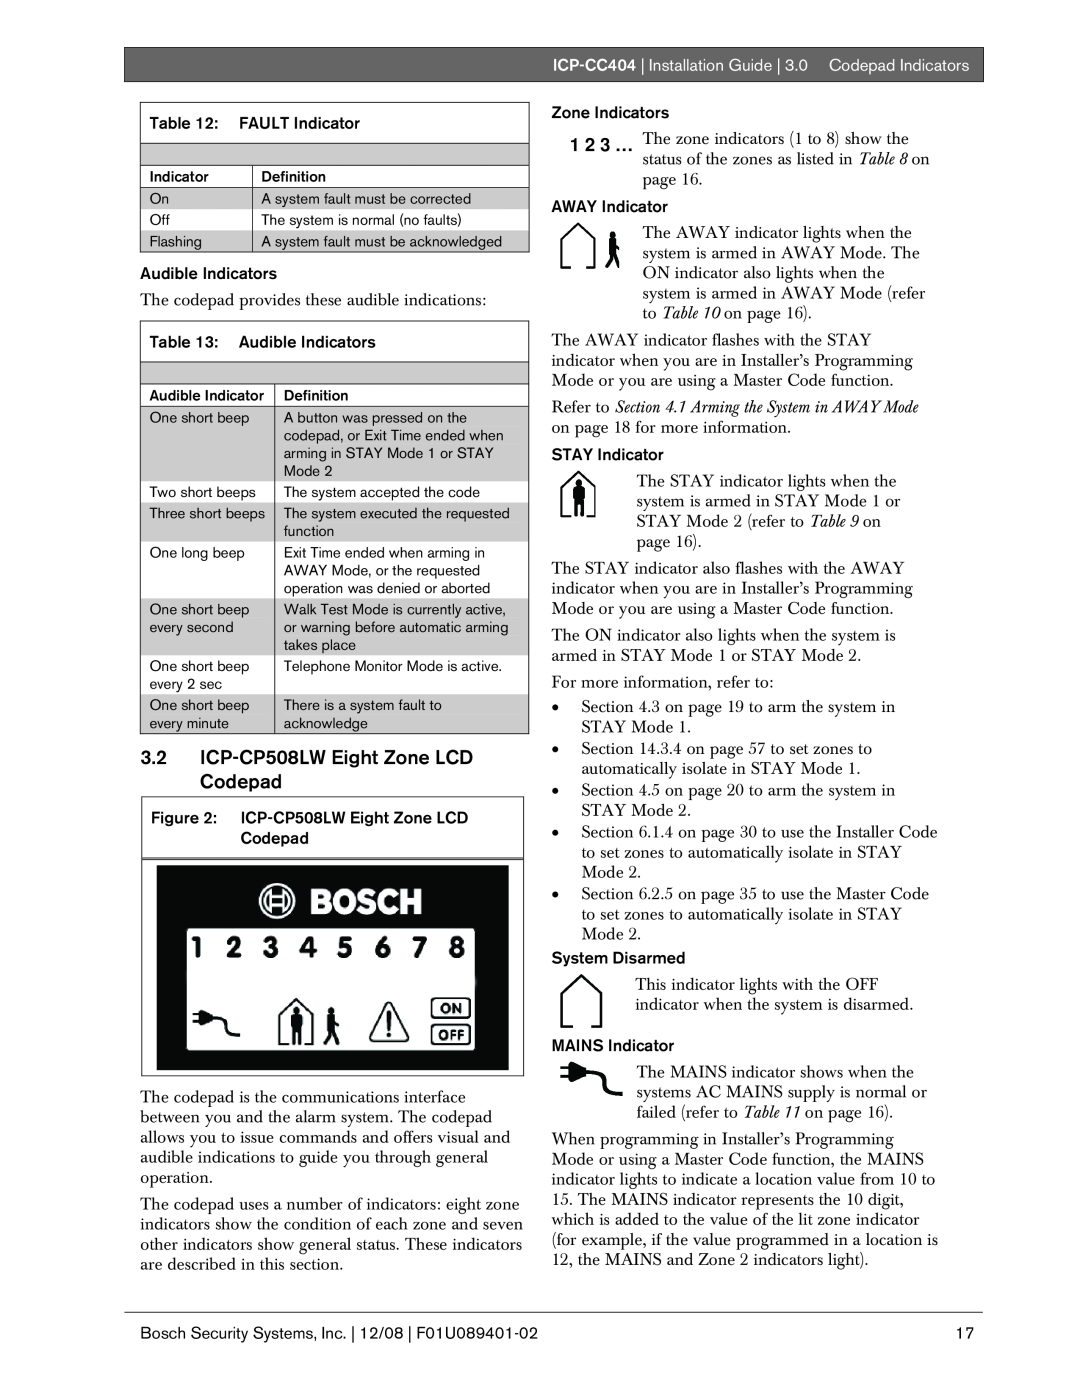 Bosch Appliances ICP-CC404 manual 3.2ICP-CP508LWEight Zone LCD Codepad 